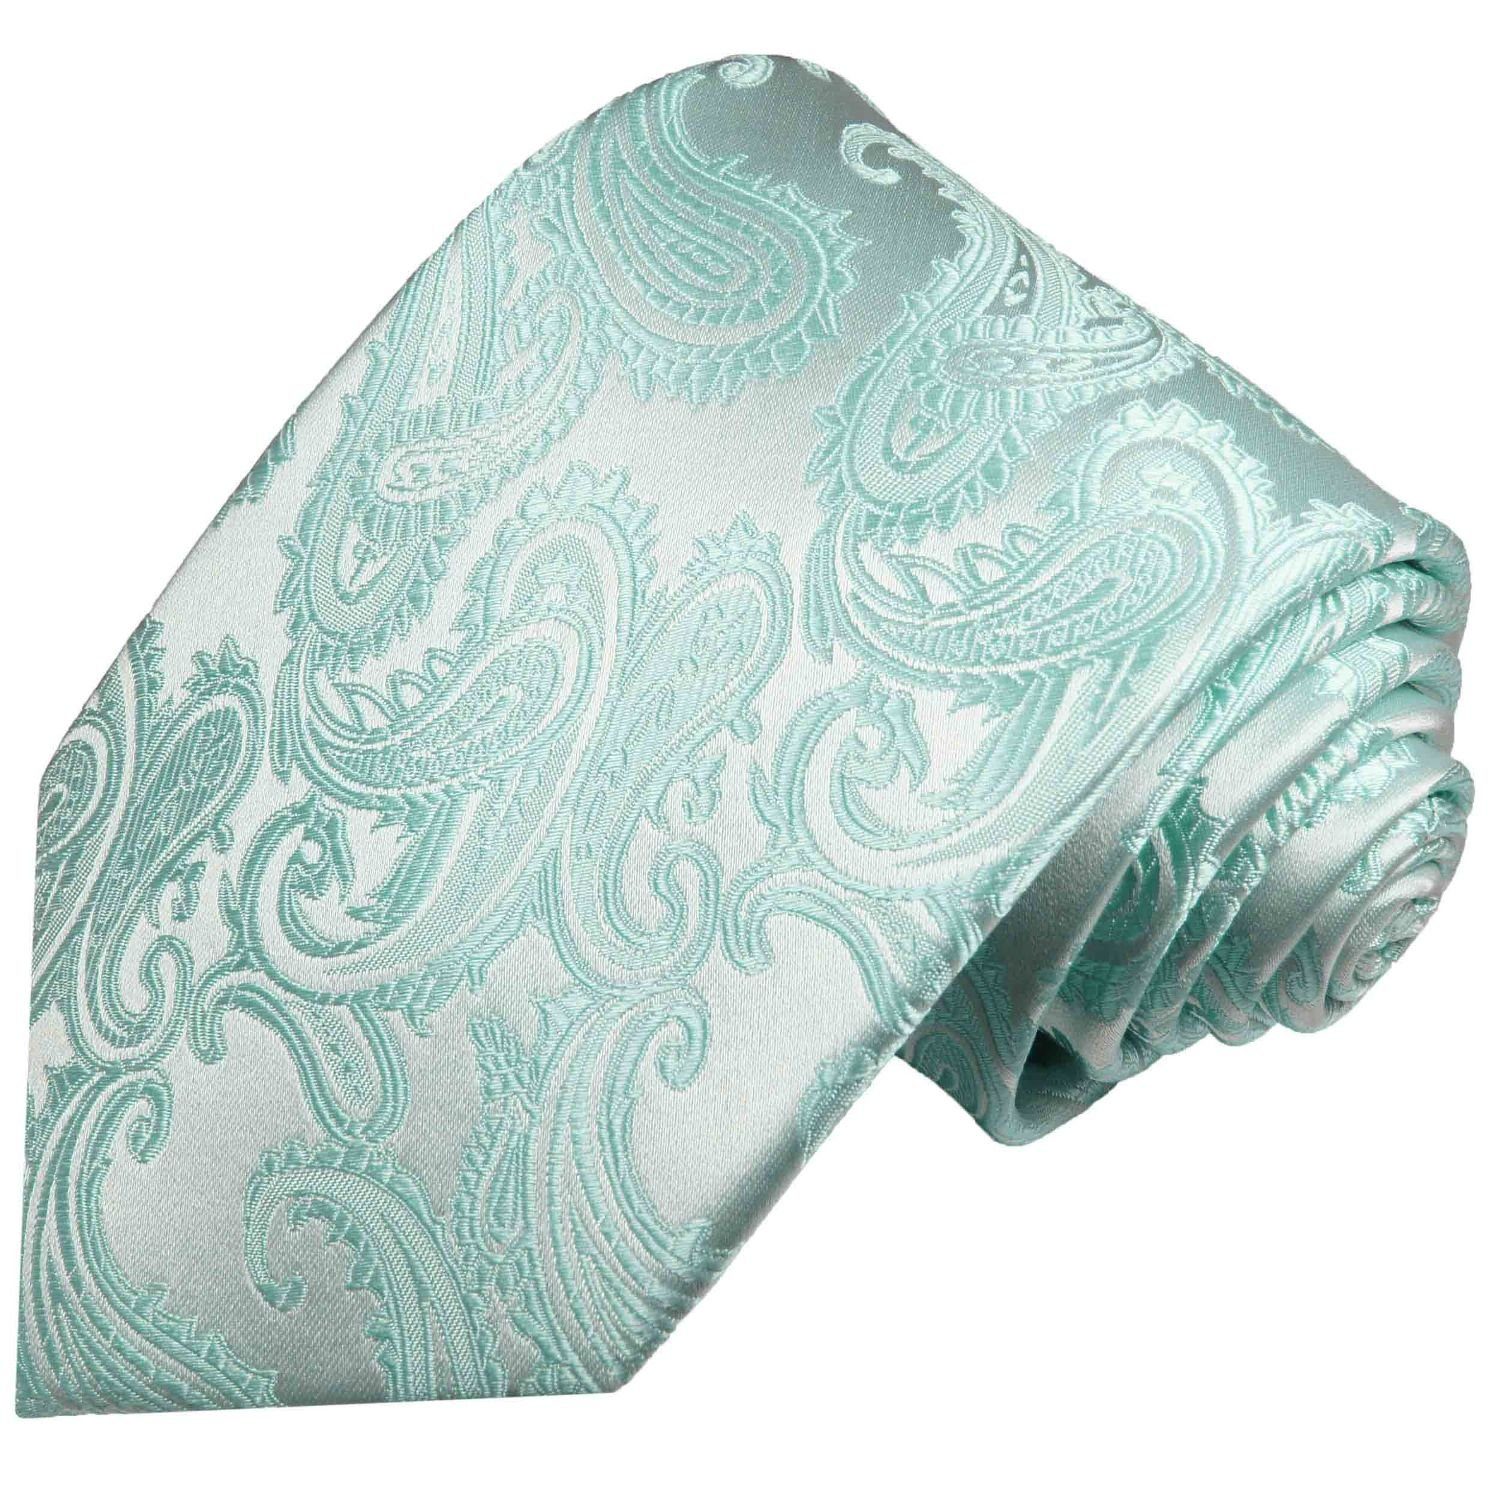 Paul hell Schlips Elegante 989 türkis Seide (8cm), 100% Krawatte Malone paisley brokat Herren Breit Seidenkrawatte